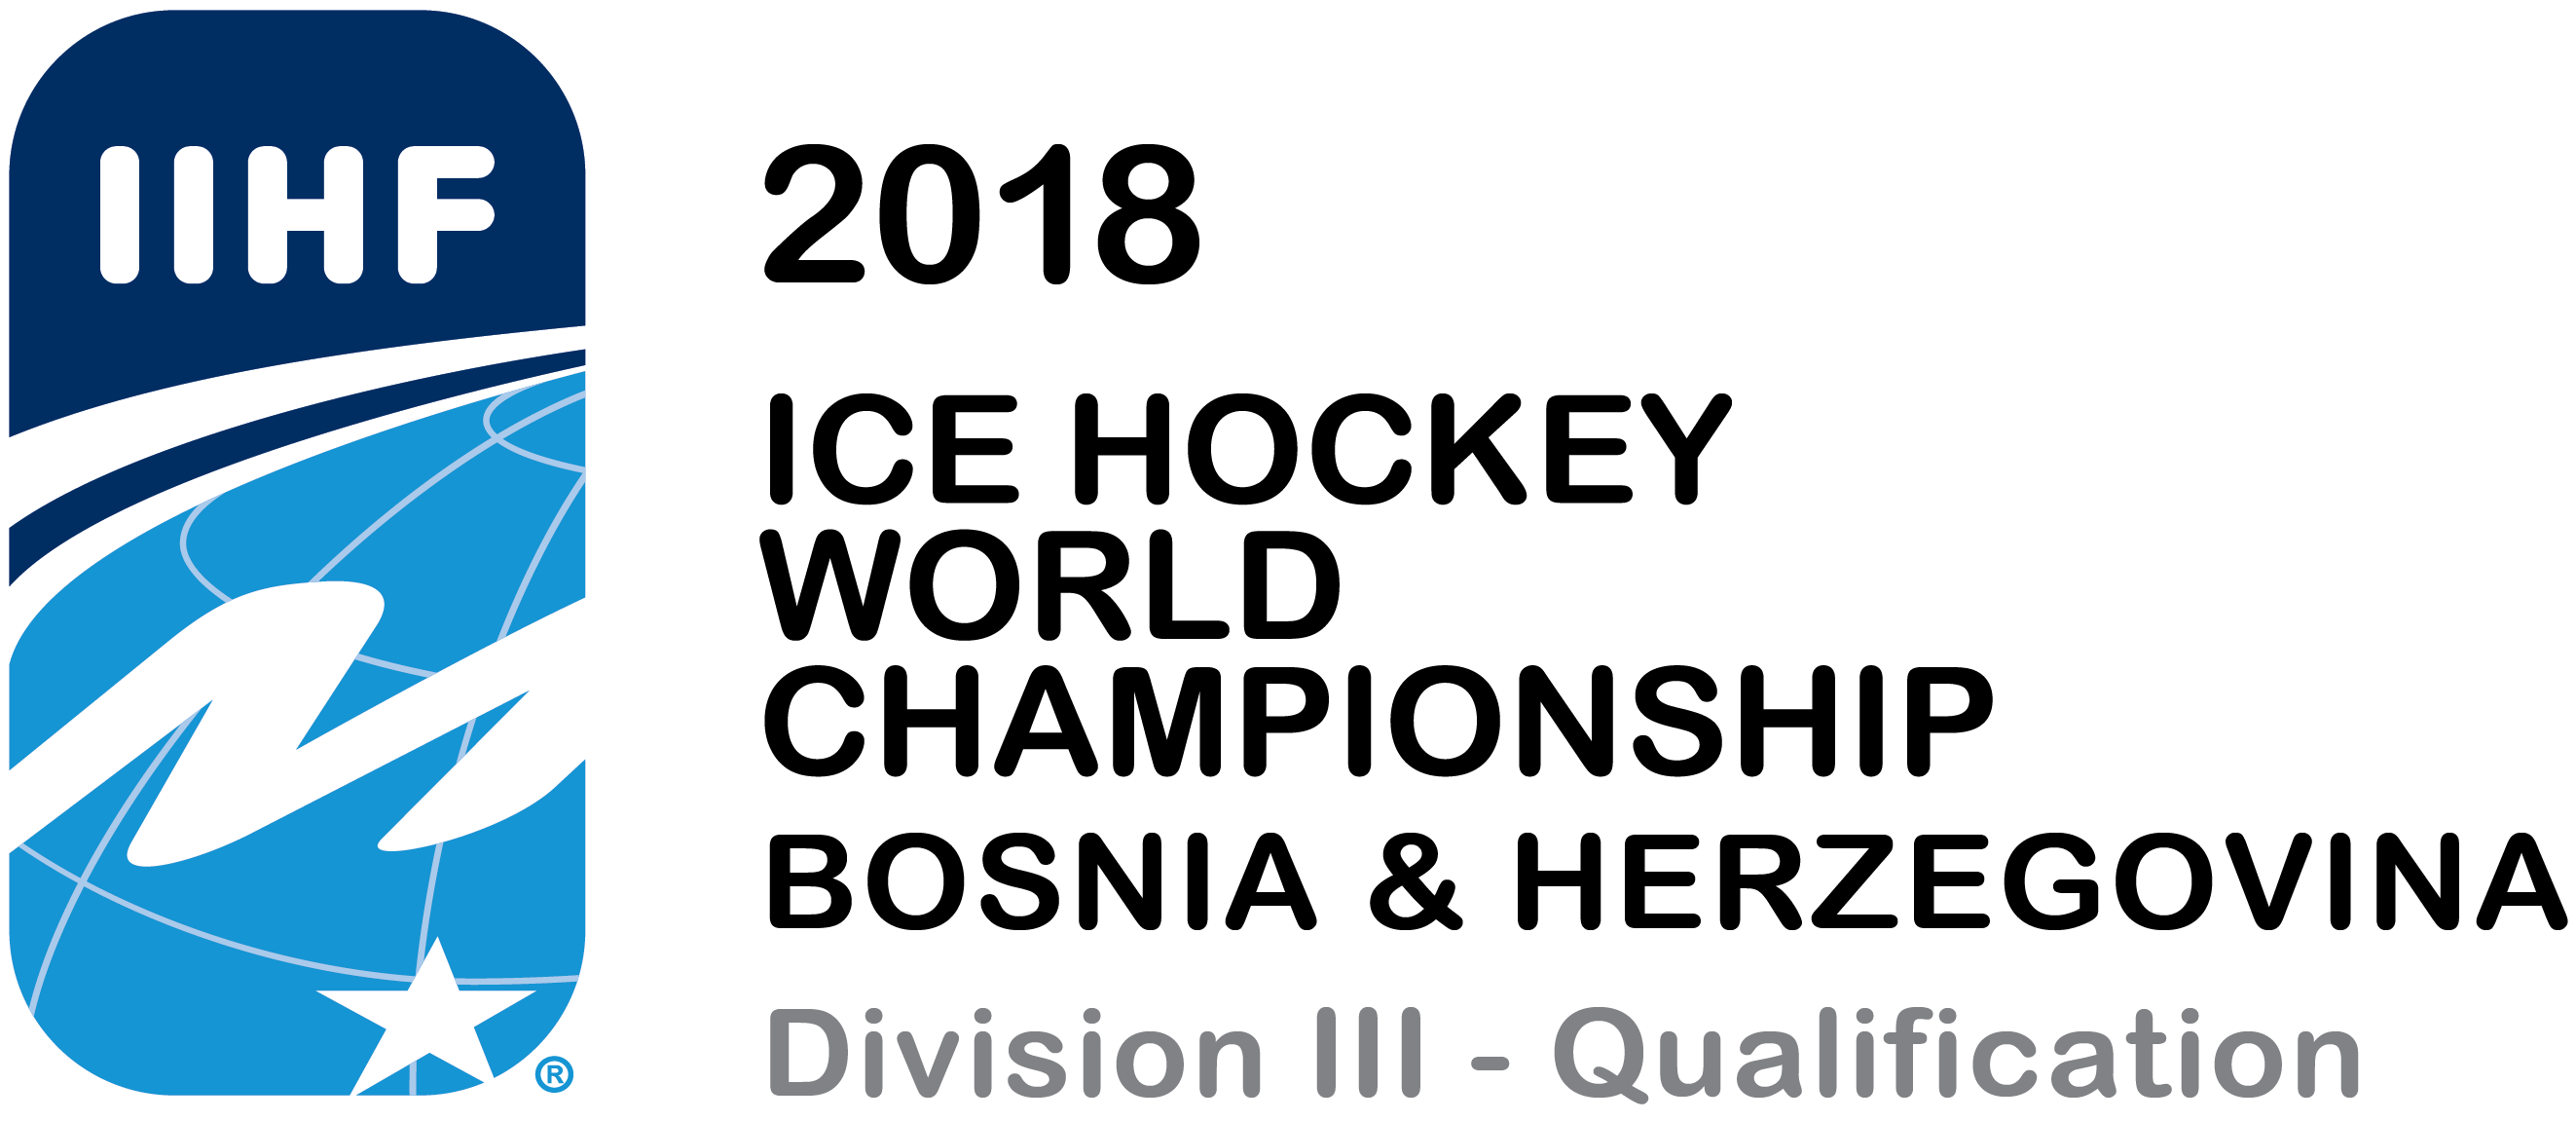 World Championship Division III Qualification - Bosnia Herzegovina